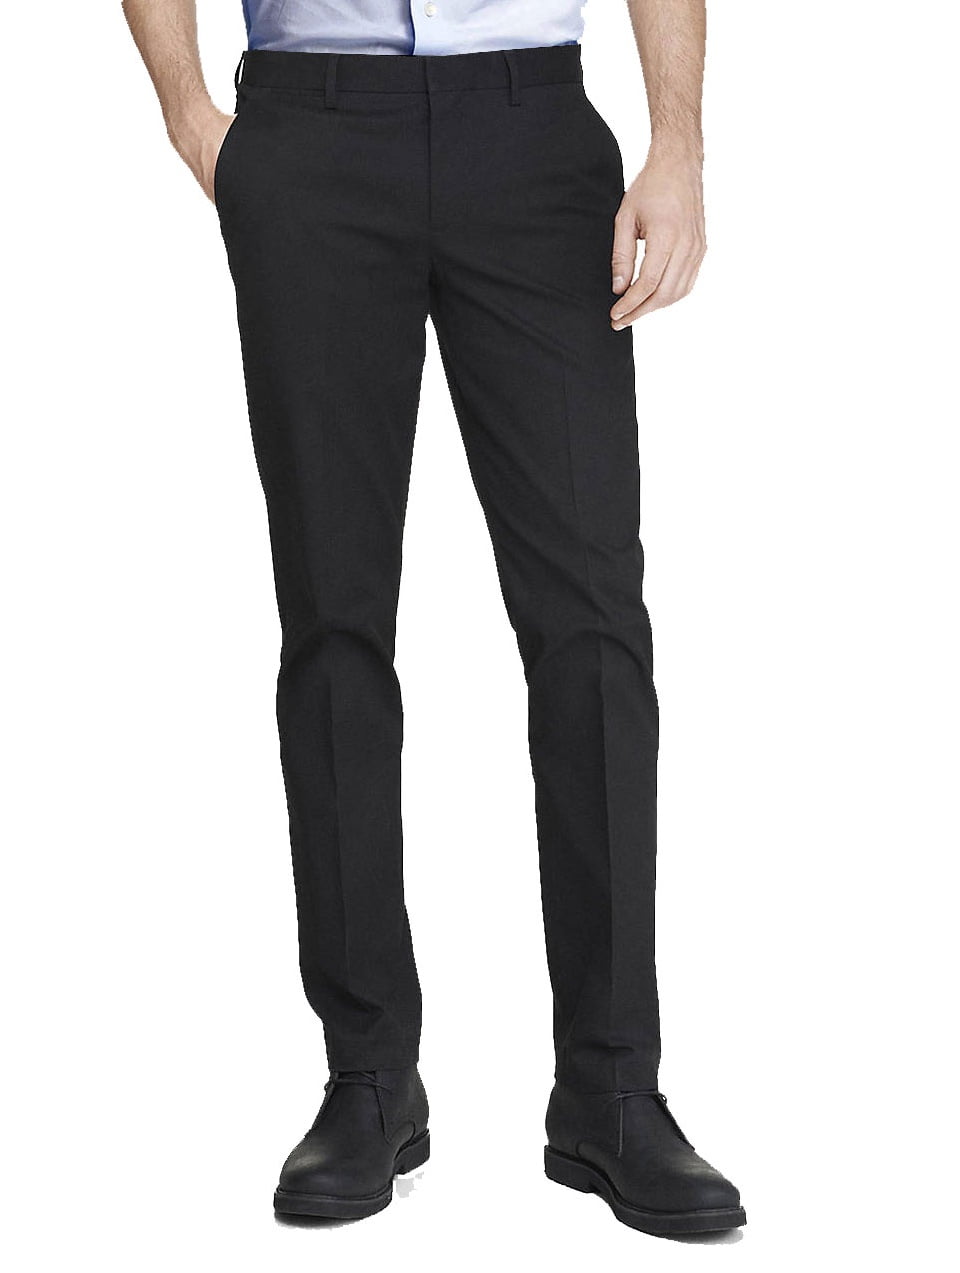 Elie Balleh Black Solid Boys Dress Pants Slacks - Walmart.com